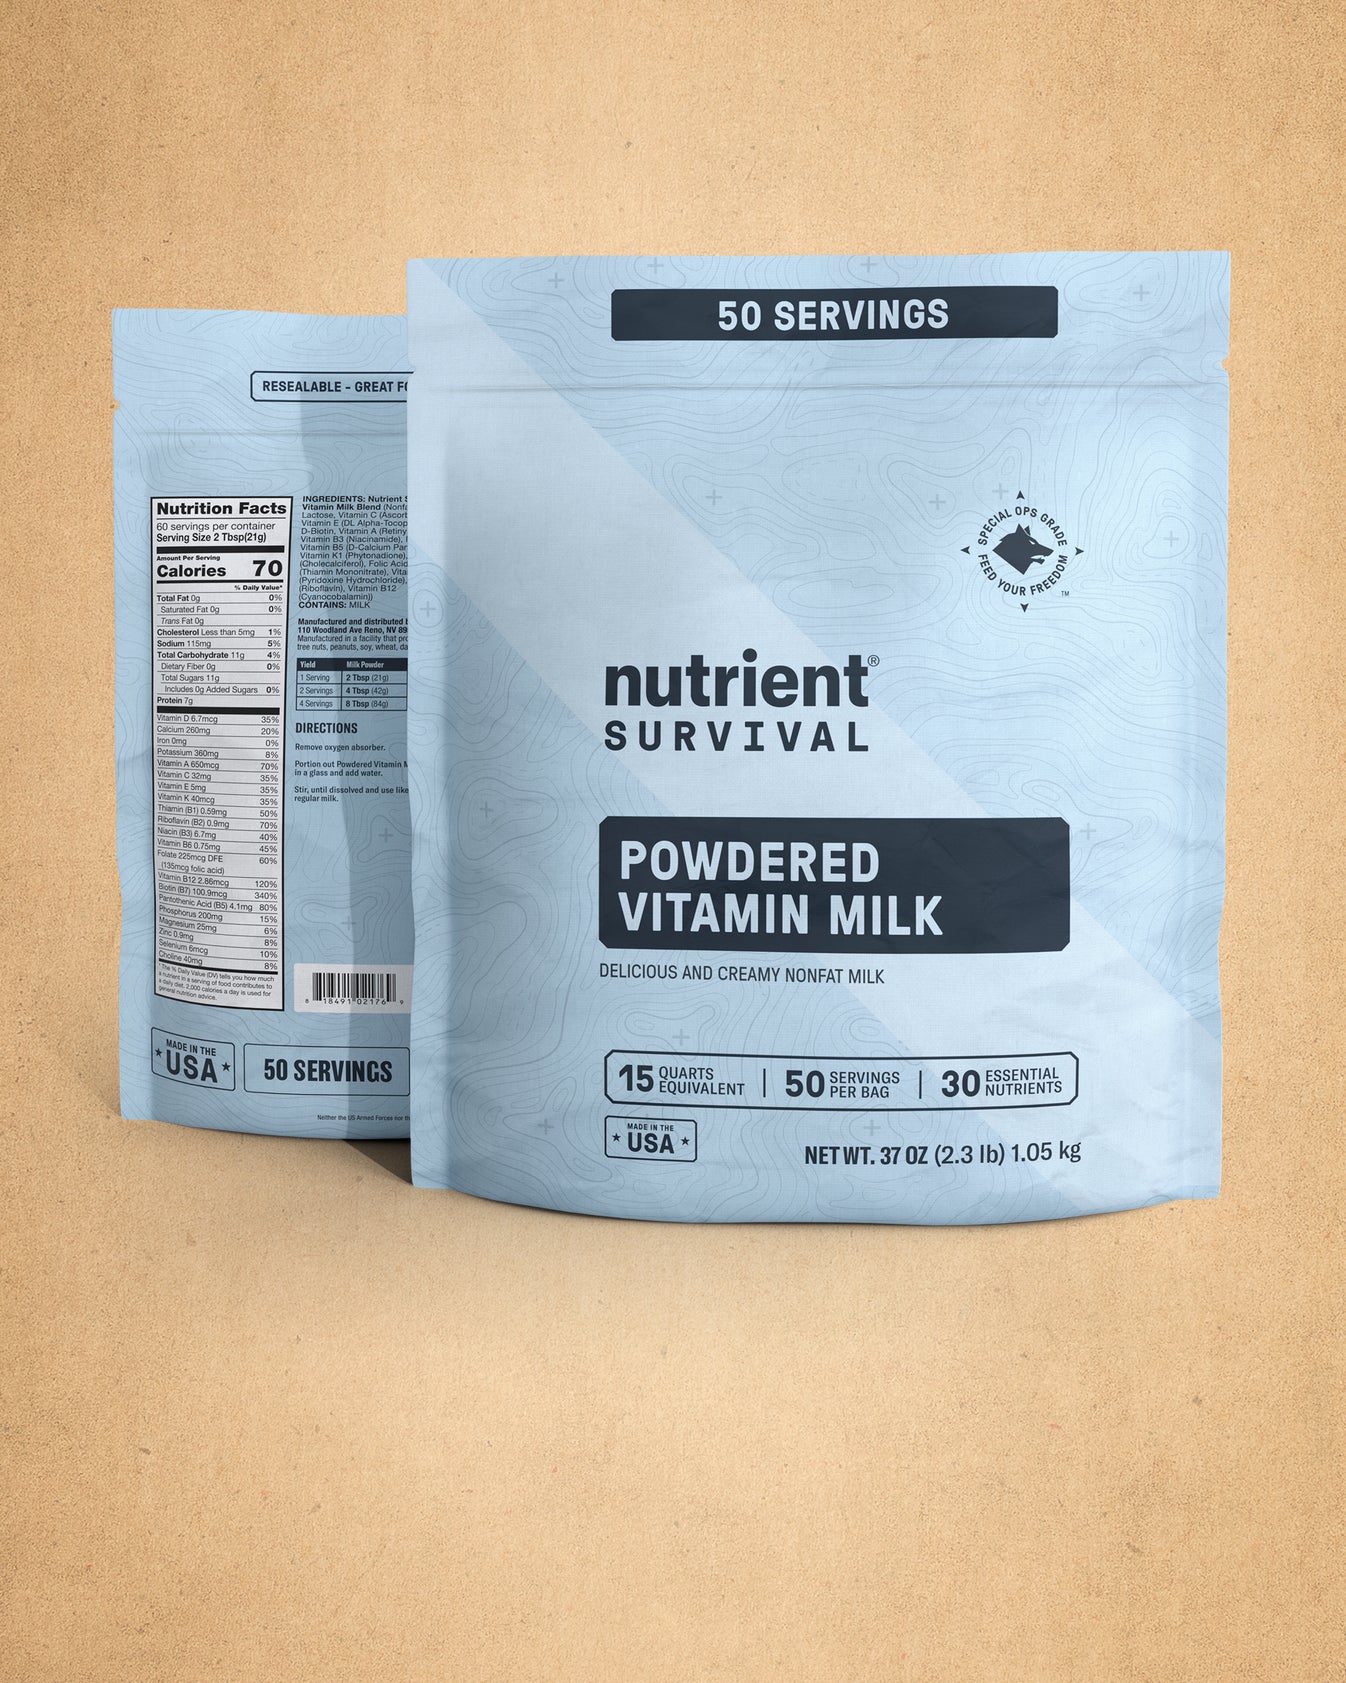 Powdered Vitamin Milk Pantry Pack